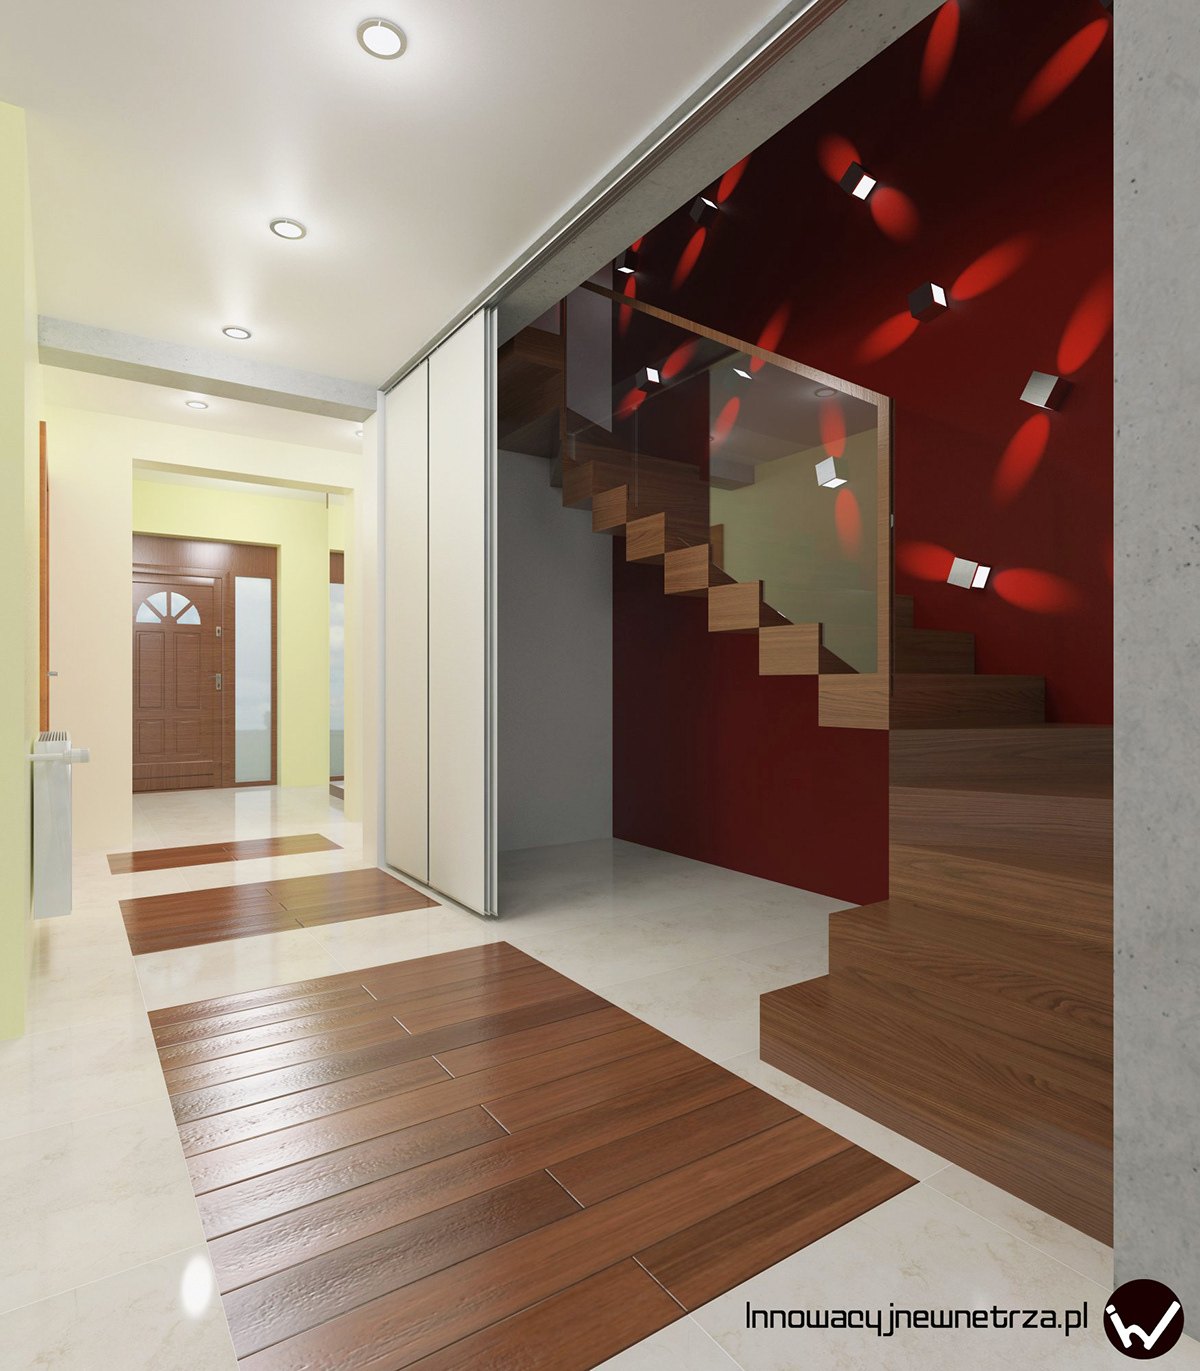 architectural visualization visualization 3D Visualization innowacyjne wnętrza cracow krakow house 94m2 red zebra brick